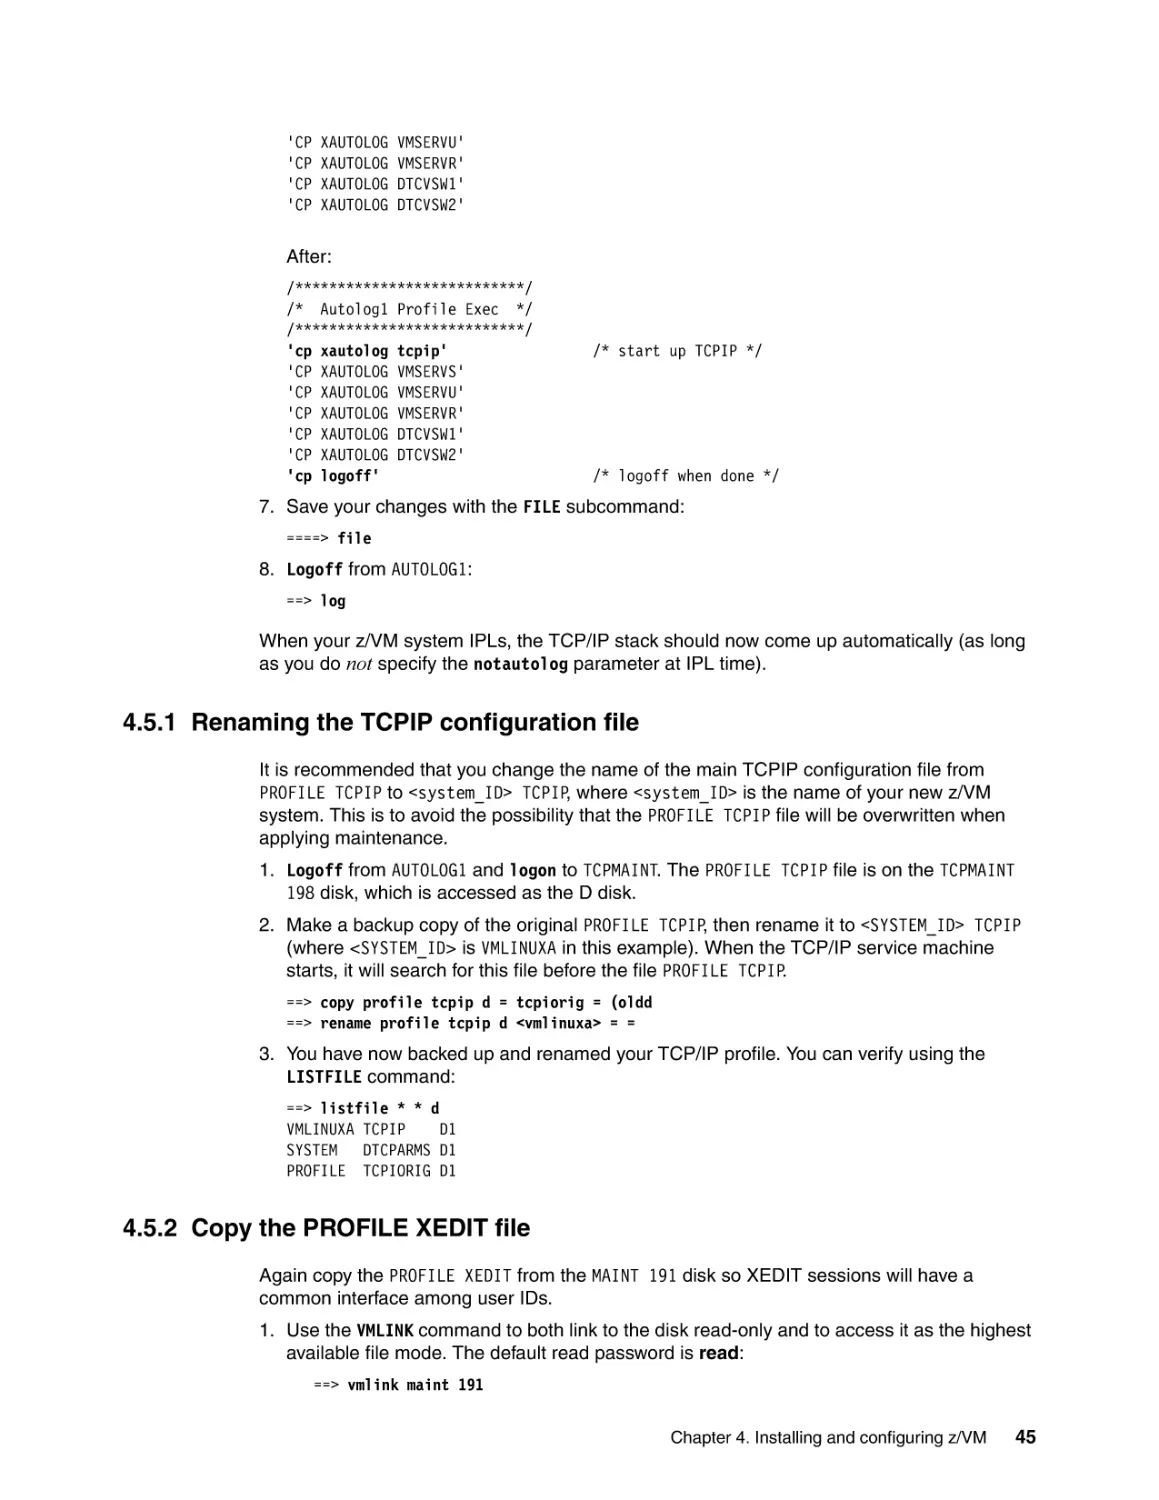 4.5.1 Renaming the TCPIP configuration file
4.5.2 Copy the PROFILE XEDIT file